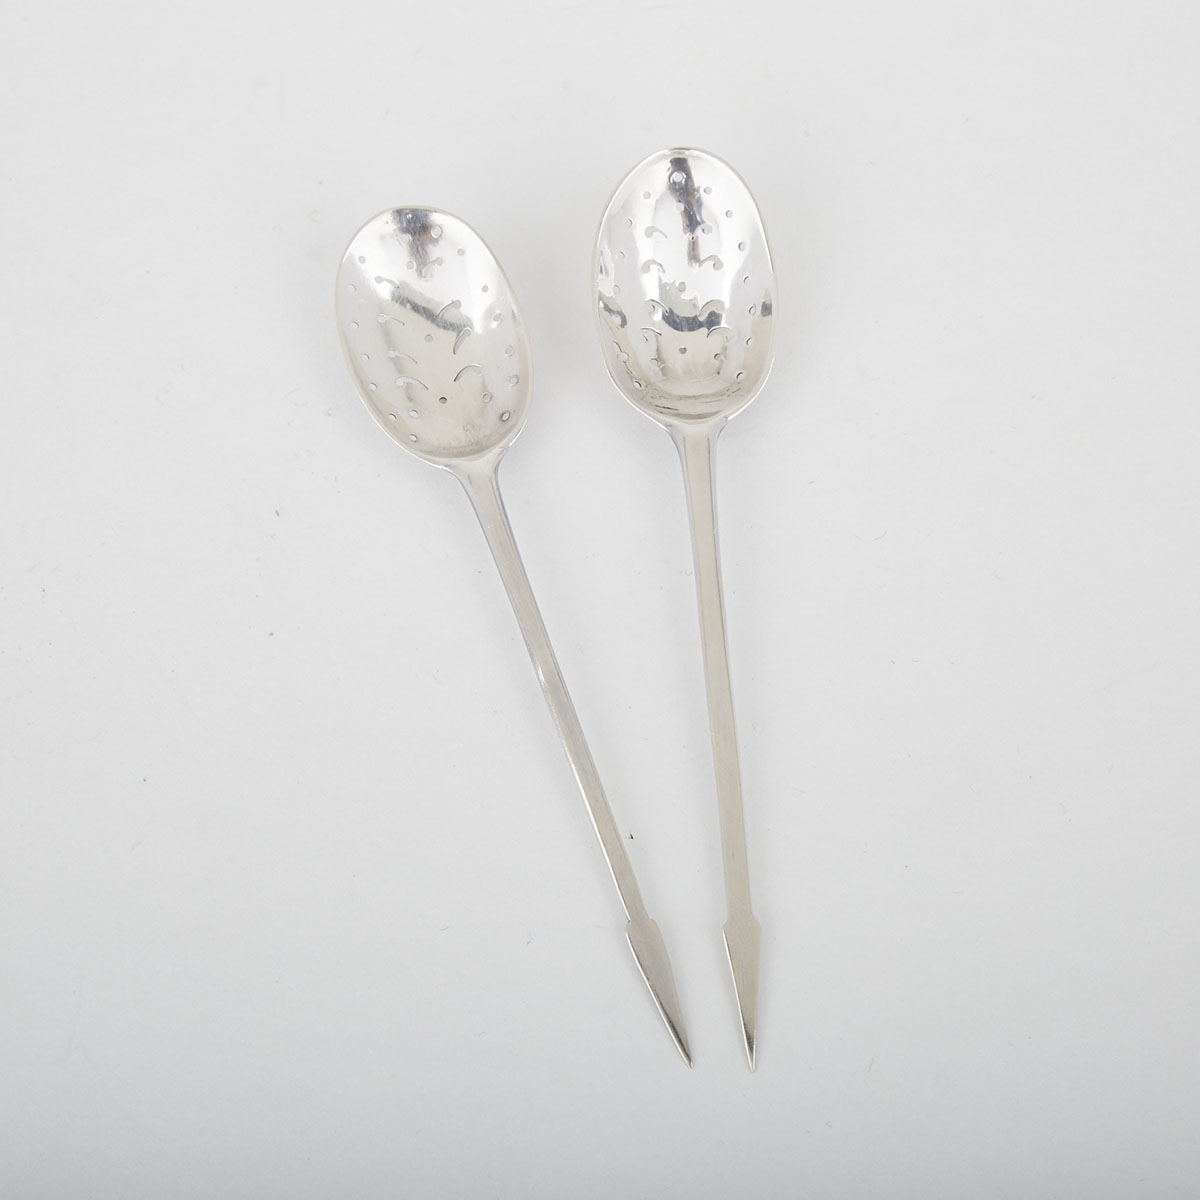 Two George II/III Irish Silver Mote Spoons, mid-18th century